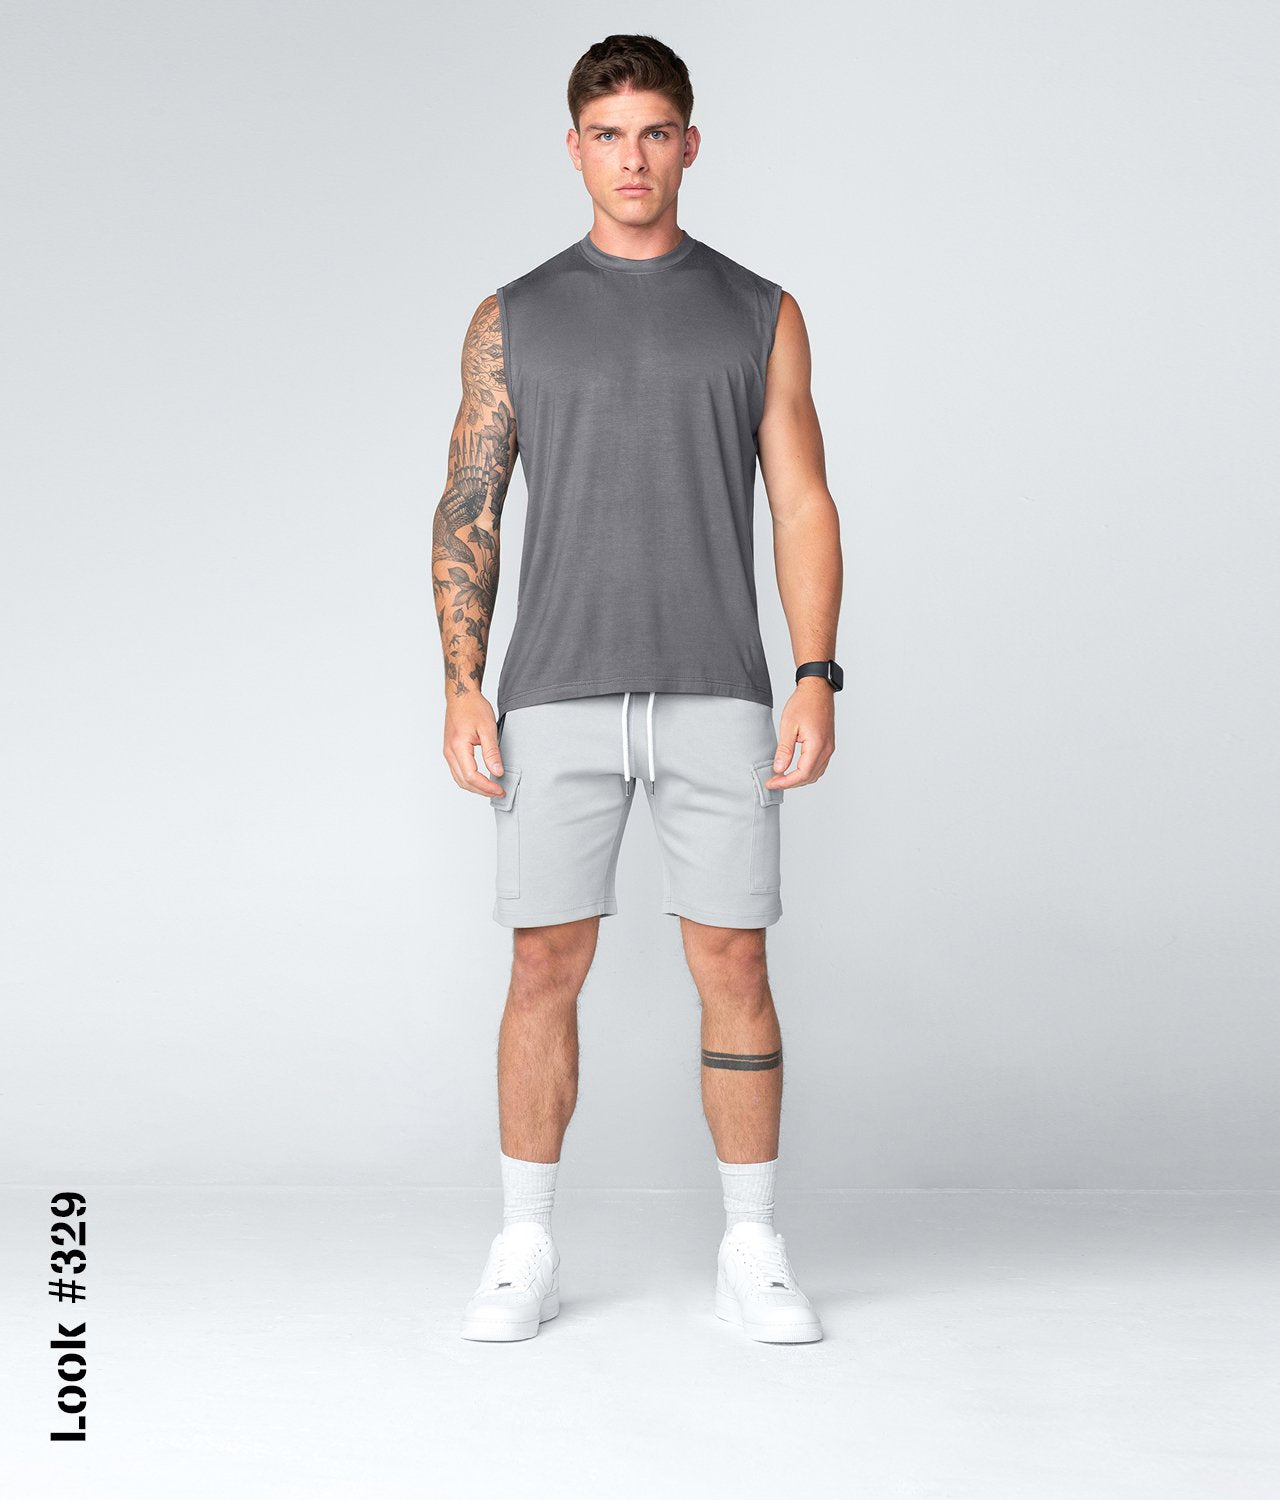  Born Tough Air Pro Men's Workout Sleeveless T-Shirt, Athletic  Bodybuilding Running Sleeveless T-Shirt for Men's (as1, Alpha, s, Regular,  Regular, Gray) : Clothing, Shoes & Jewelry